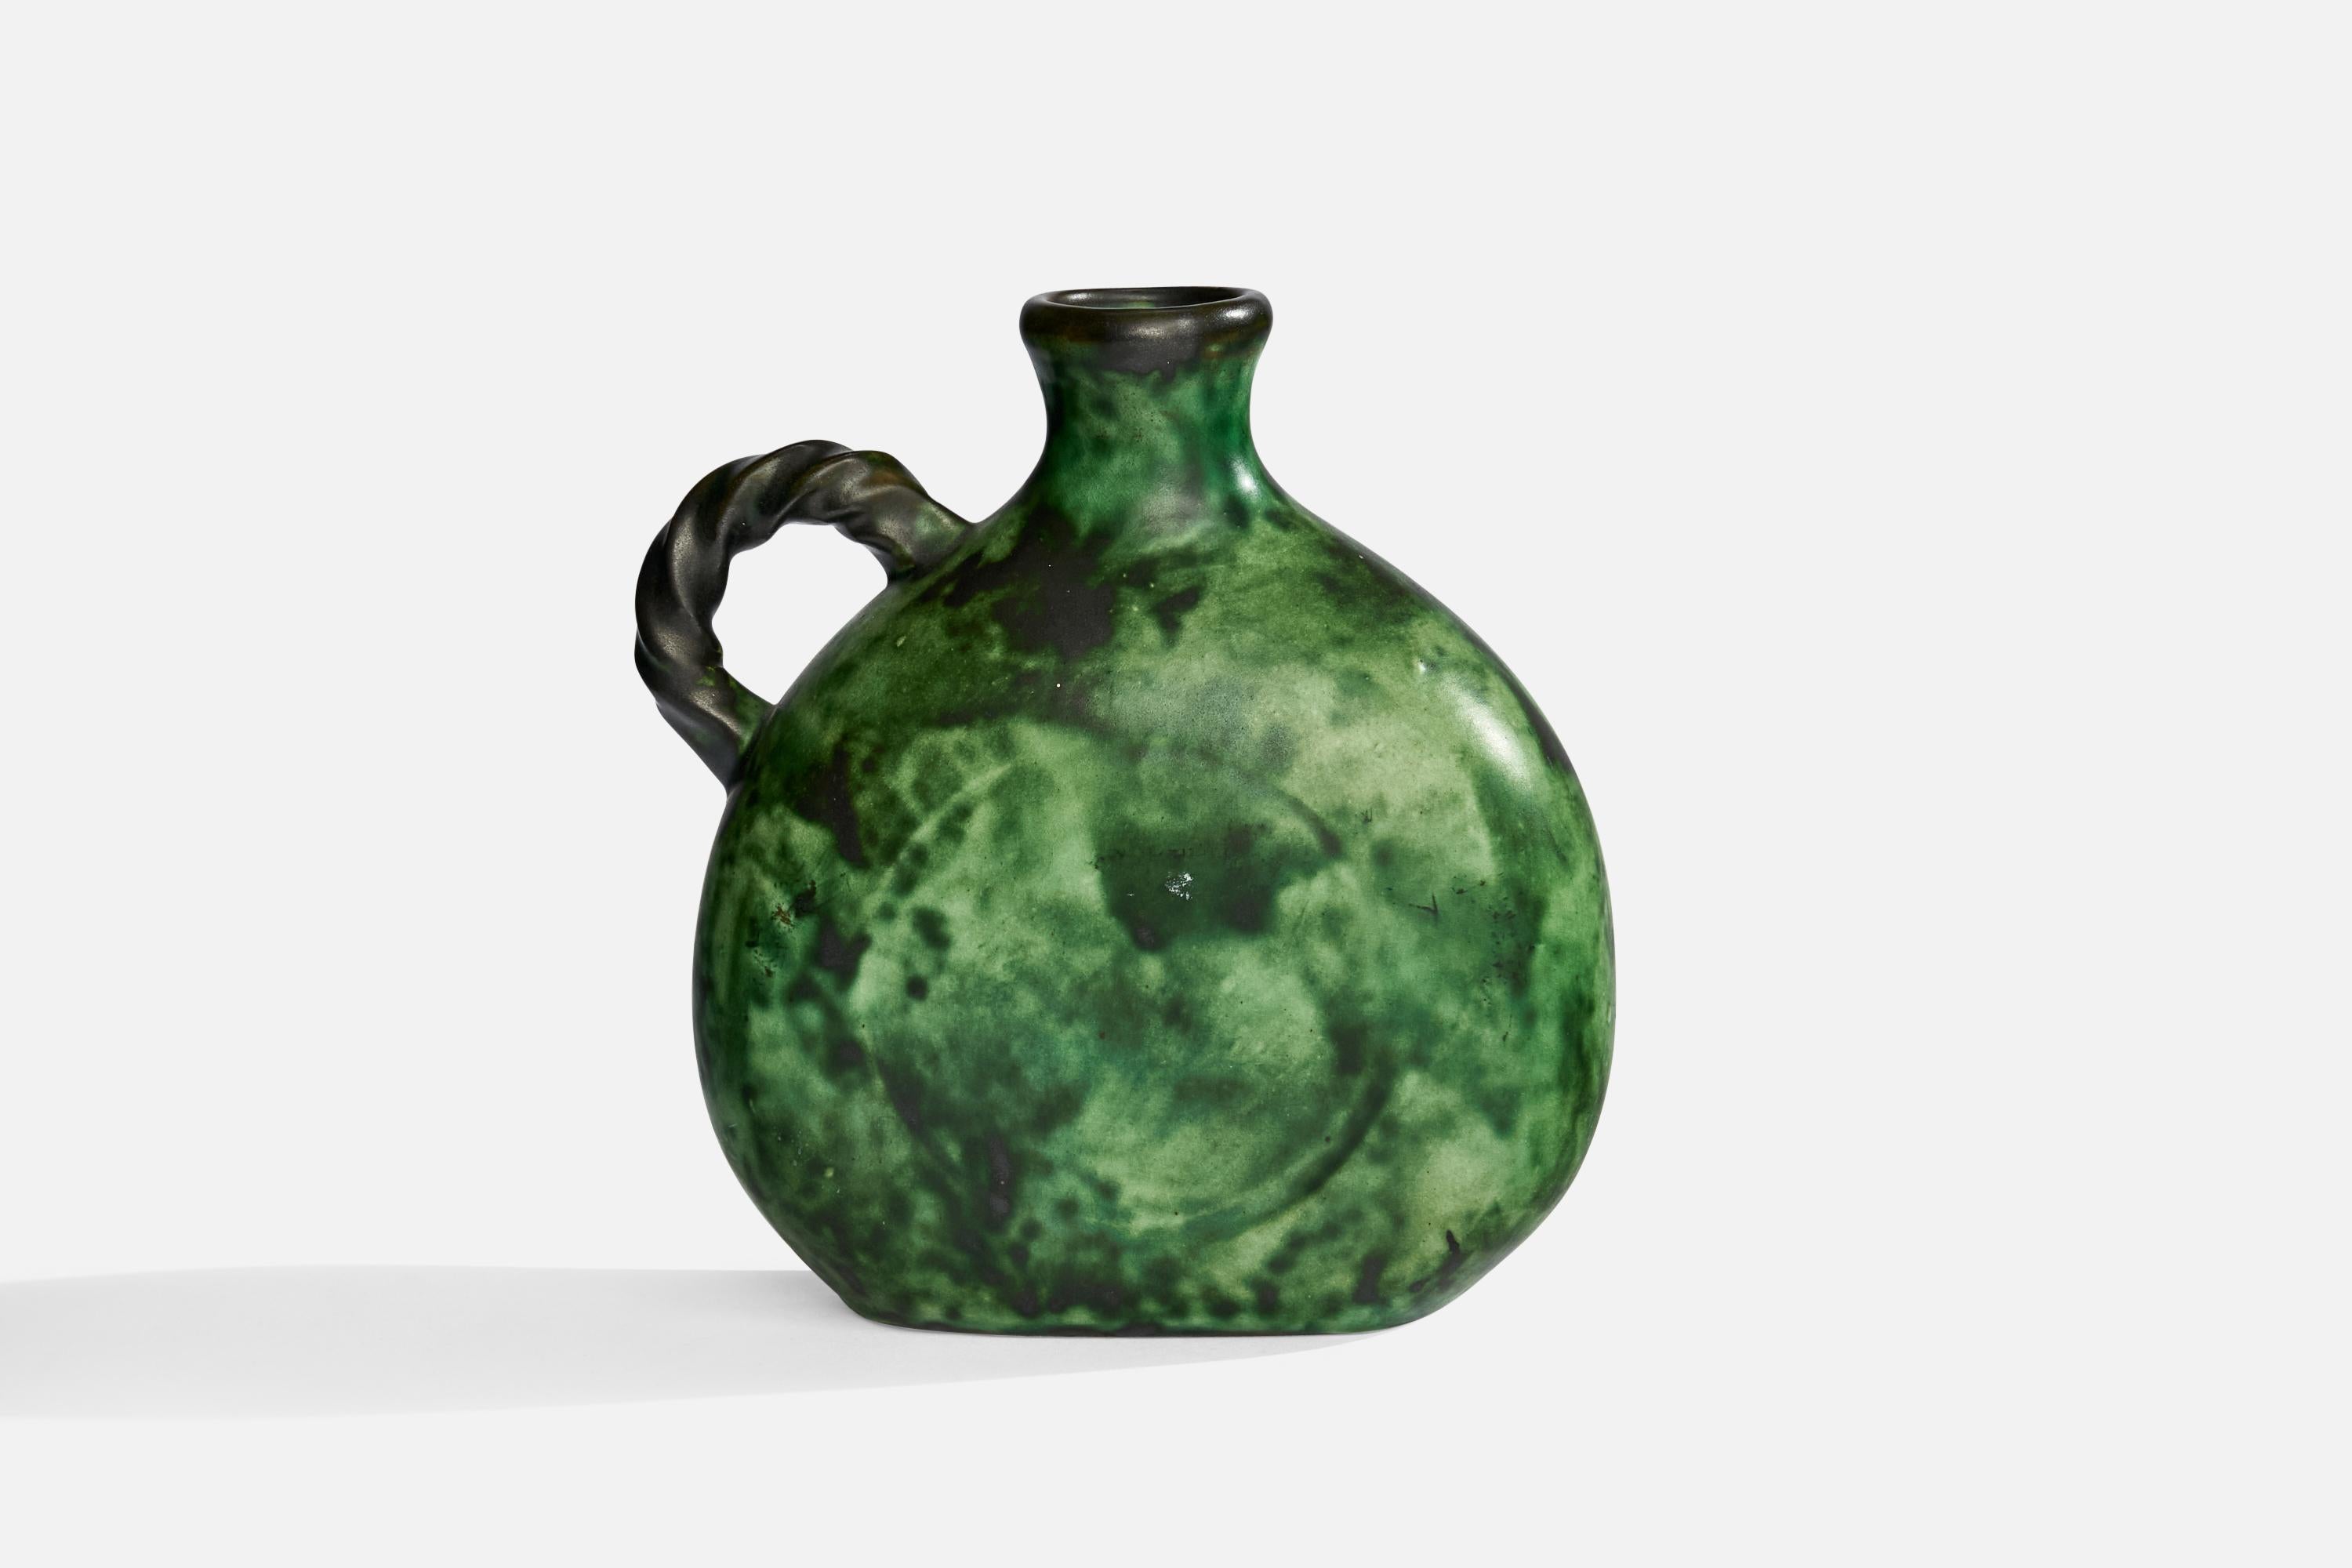 A green-glazed earthenware vase designed by Erik Mornils and produced by Nittsjö, Sweden c. 1930s.